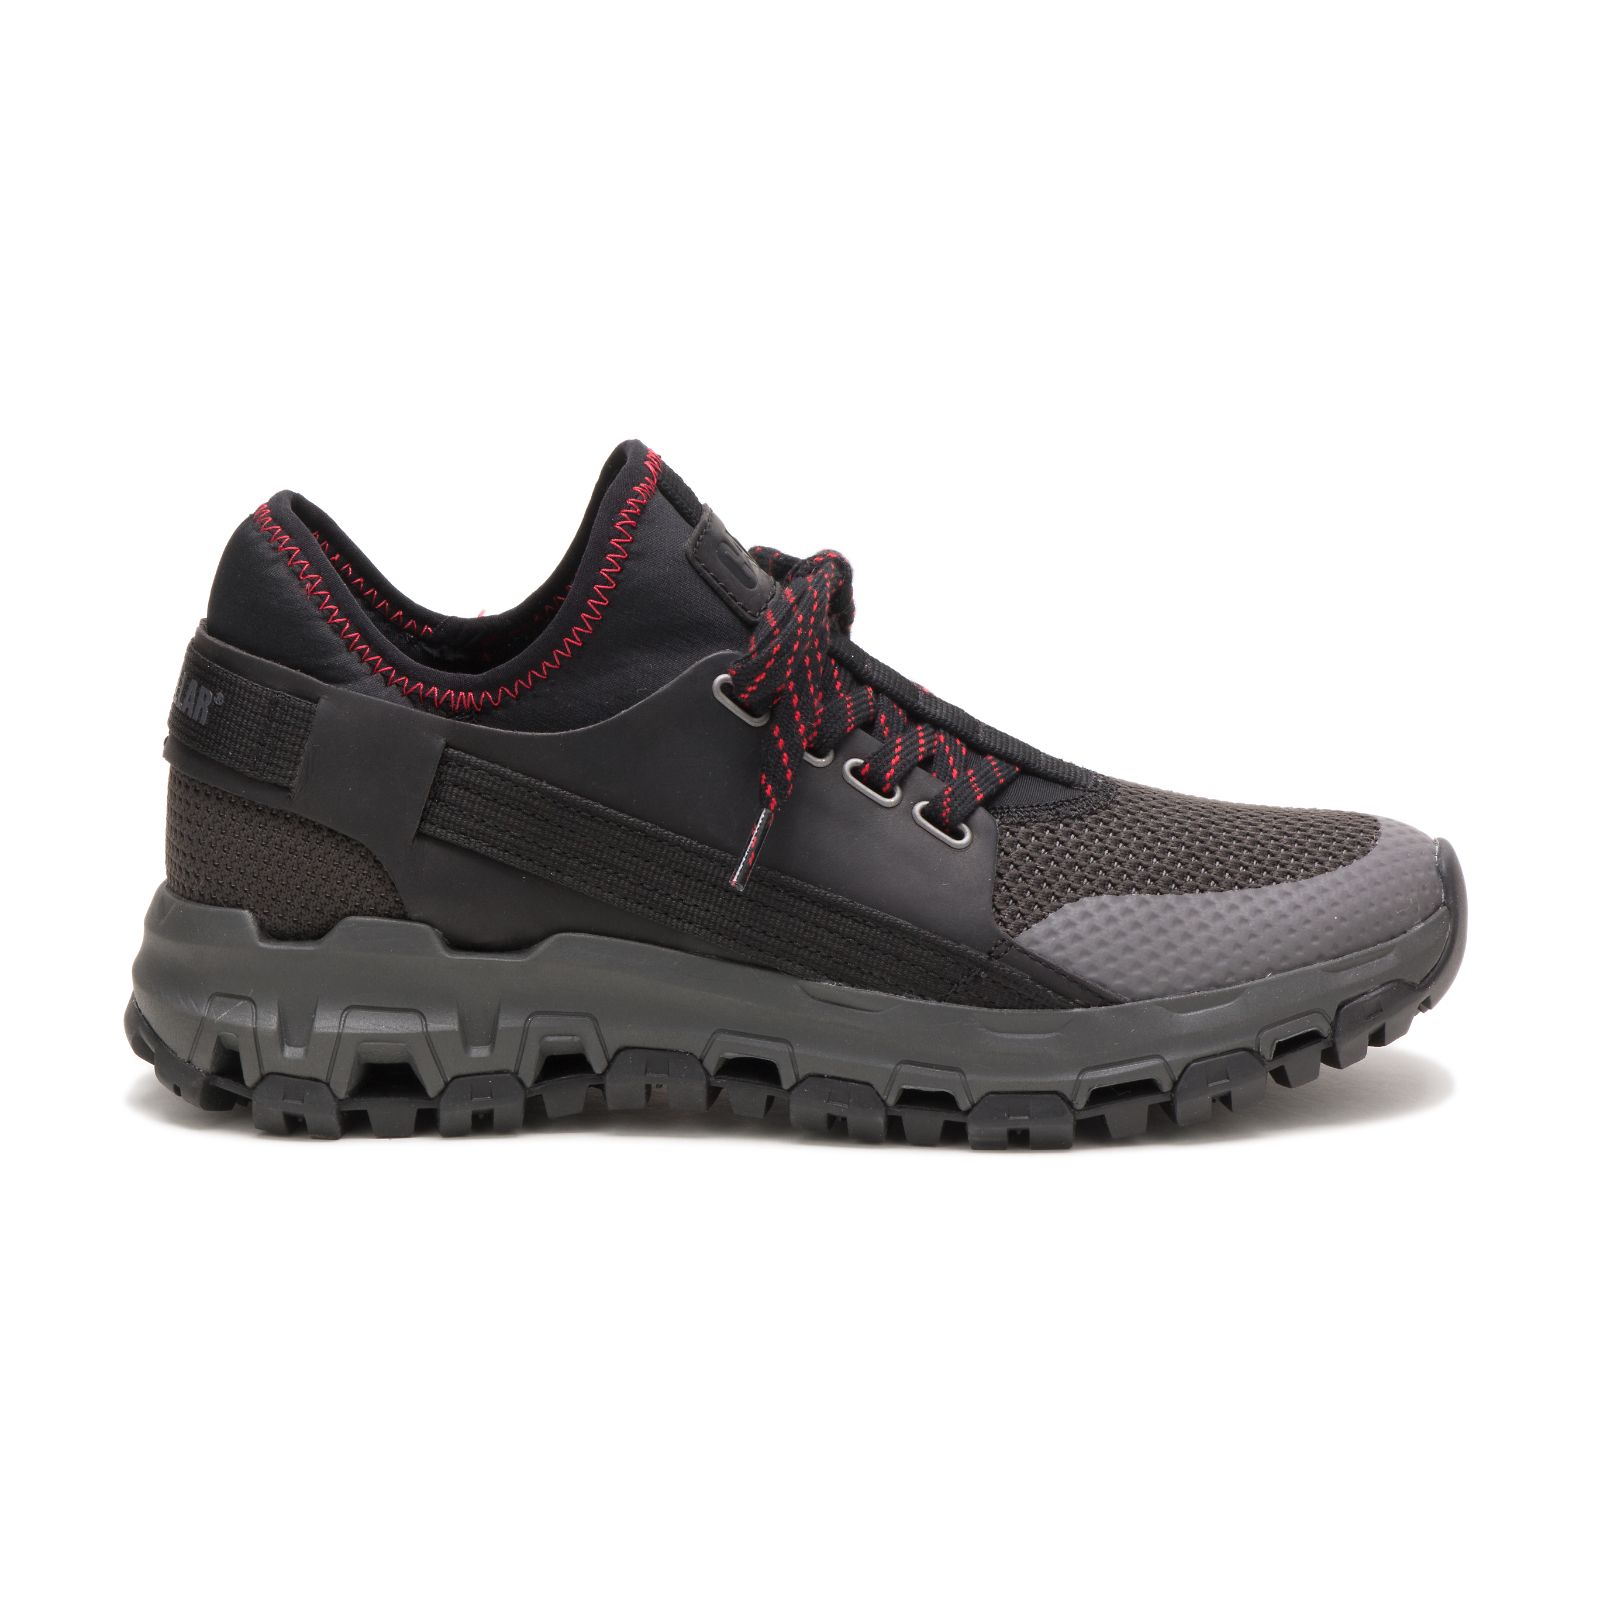 Caterpillar Casual Shoes Dubai - Caterpillar Urban Tracks Sport Mens - Black CLAVKR629